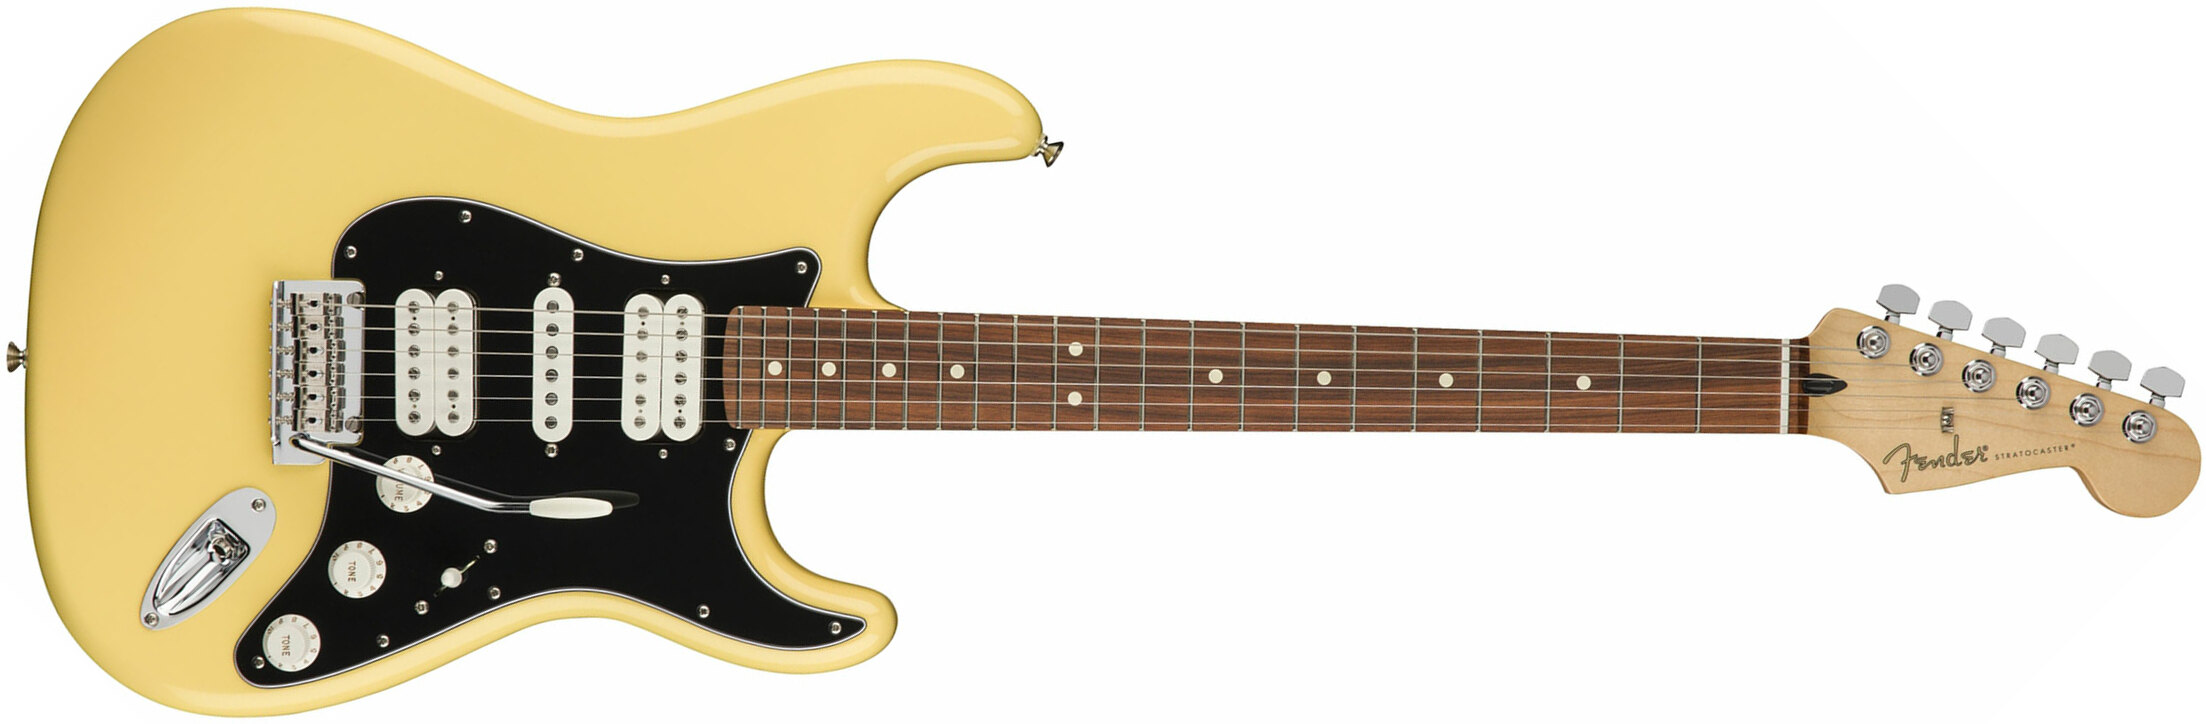 Fender Strat Player Mex Hsh Pf - Buttercream - Guitarra eléctrica con forma de str. - Main picture